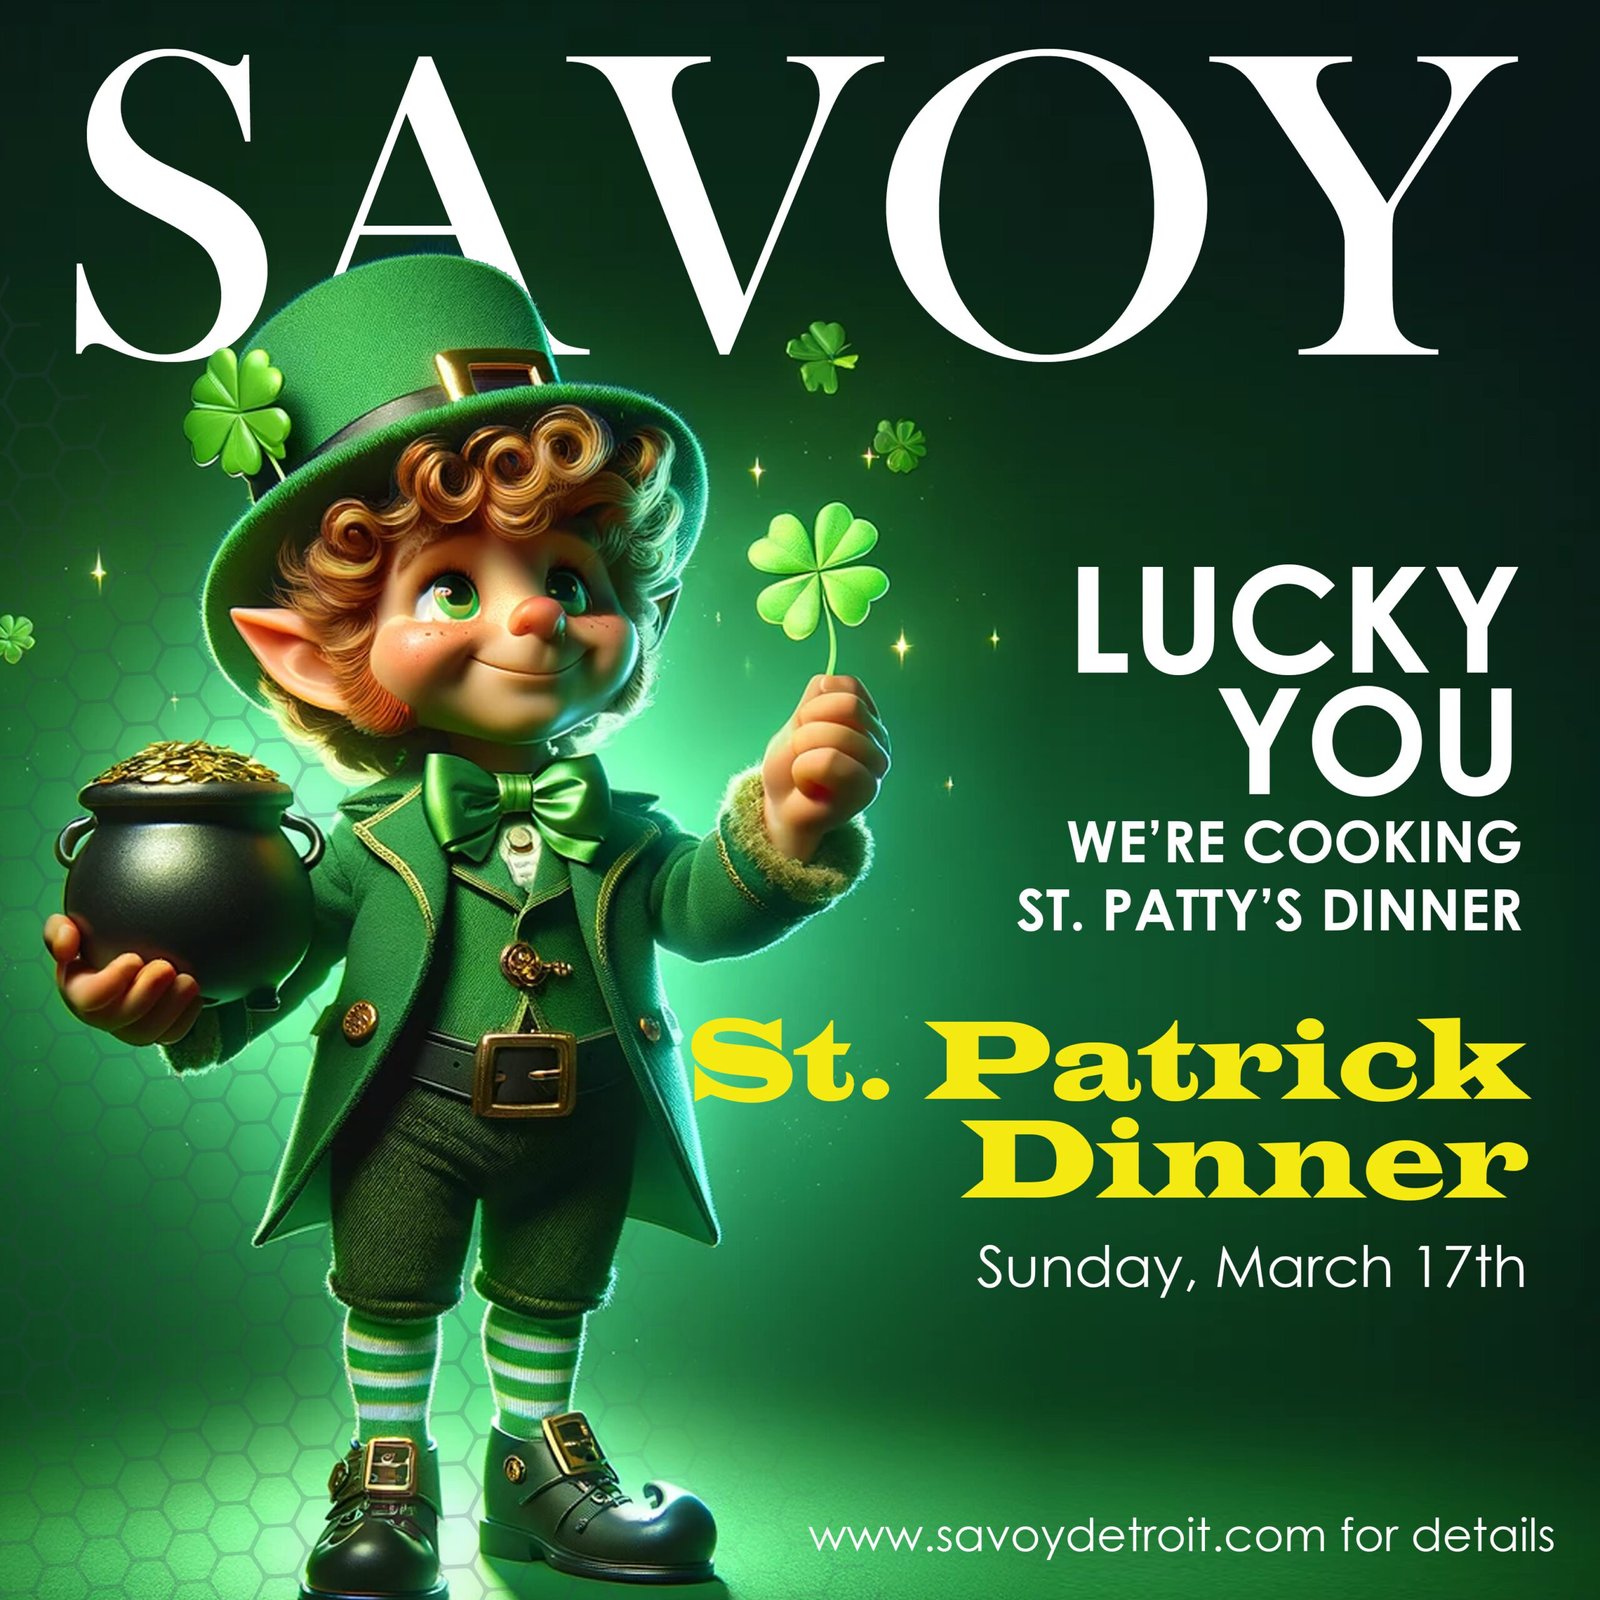 Let the SAVOY Restaurant handle dinner this St. Patricks Day!